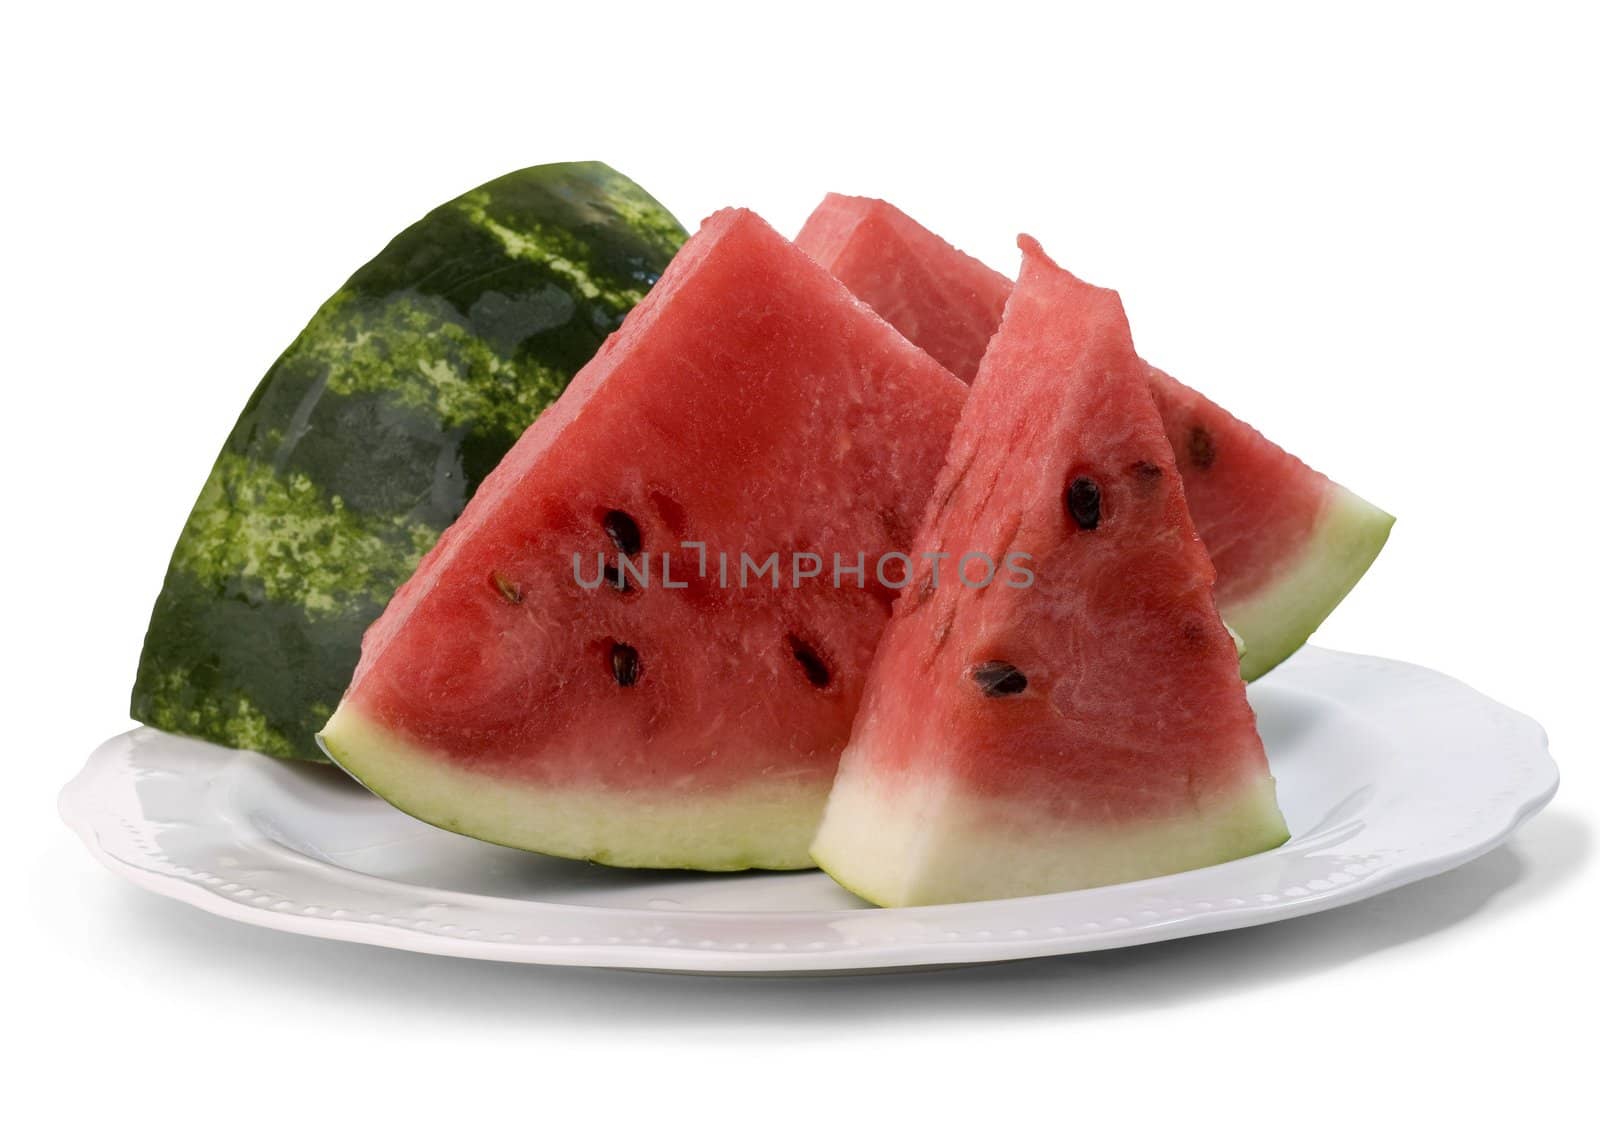 Watermelon slices by Baltus